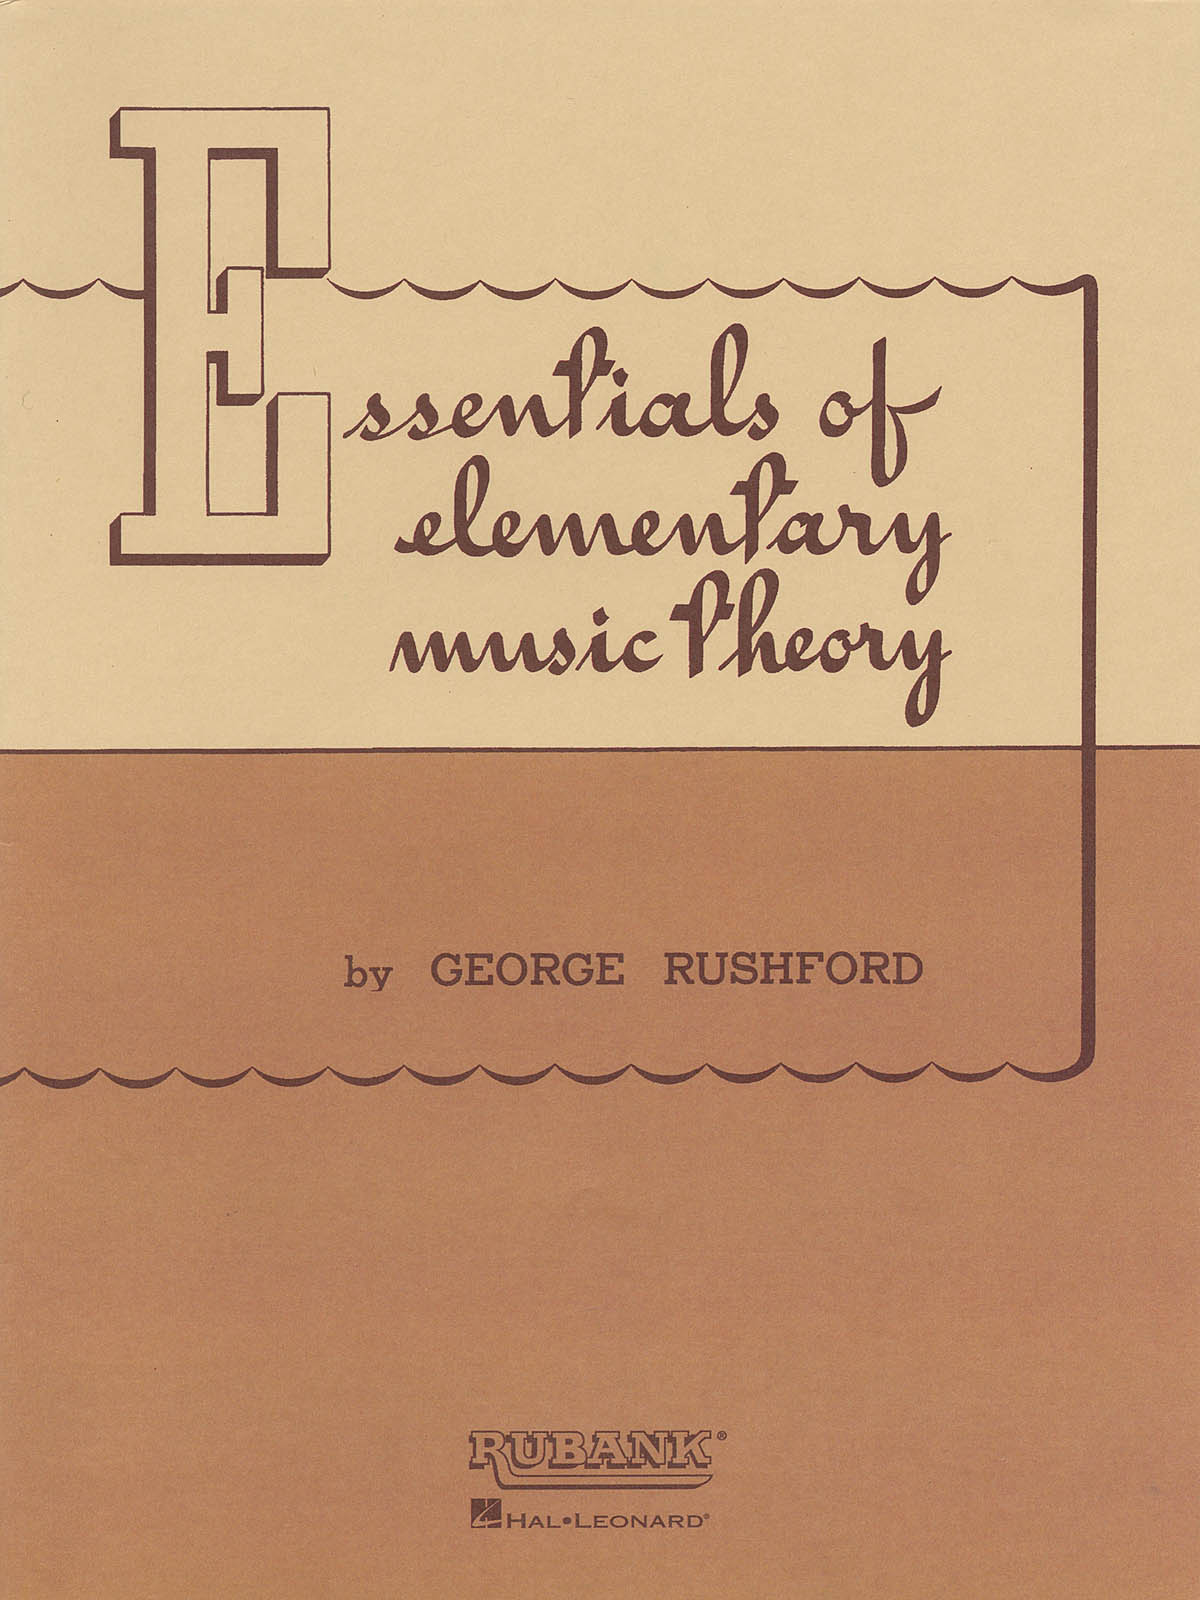 Essentials of Elementary Music Theory: Instrumental Album